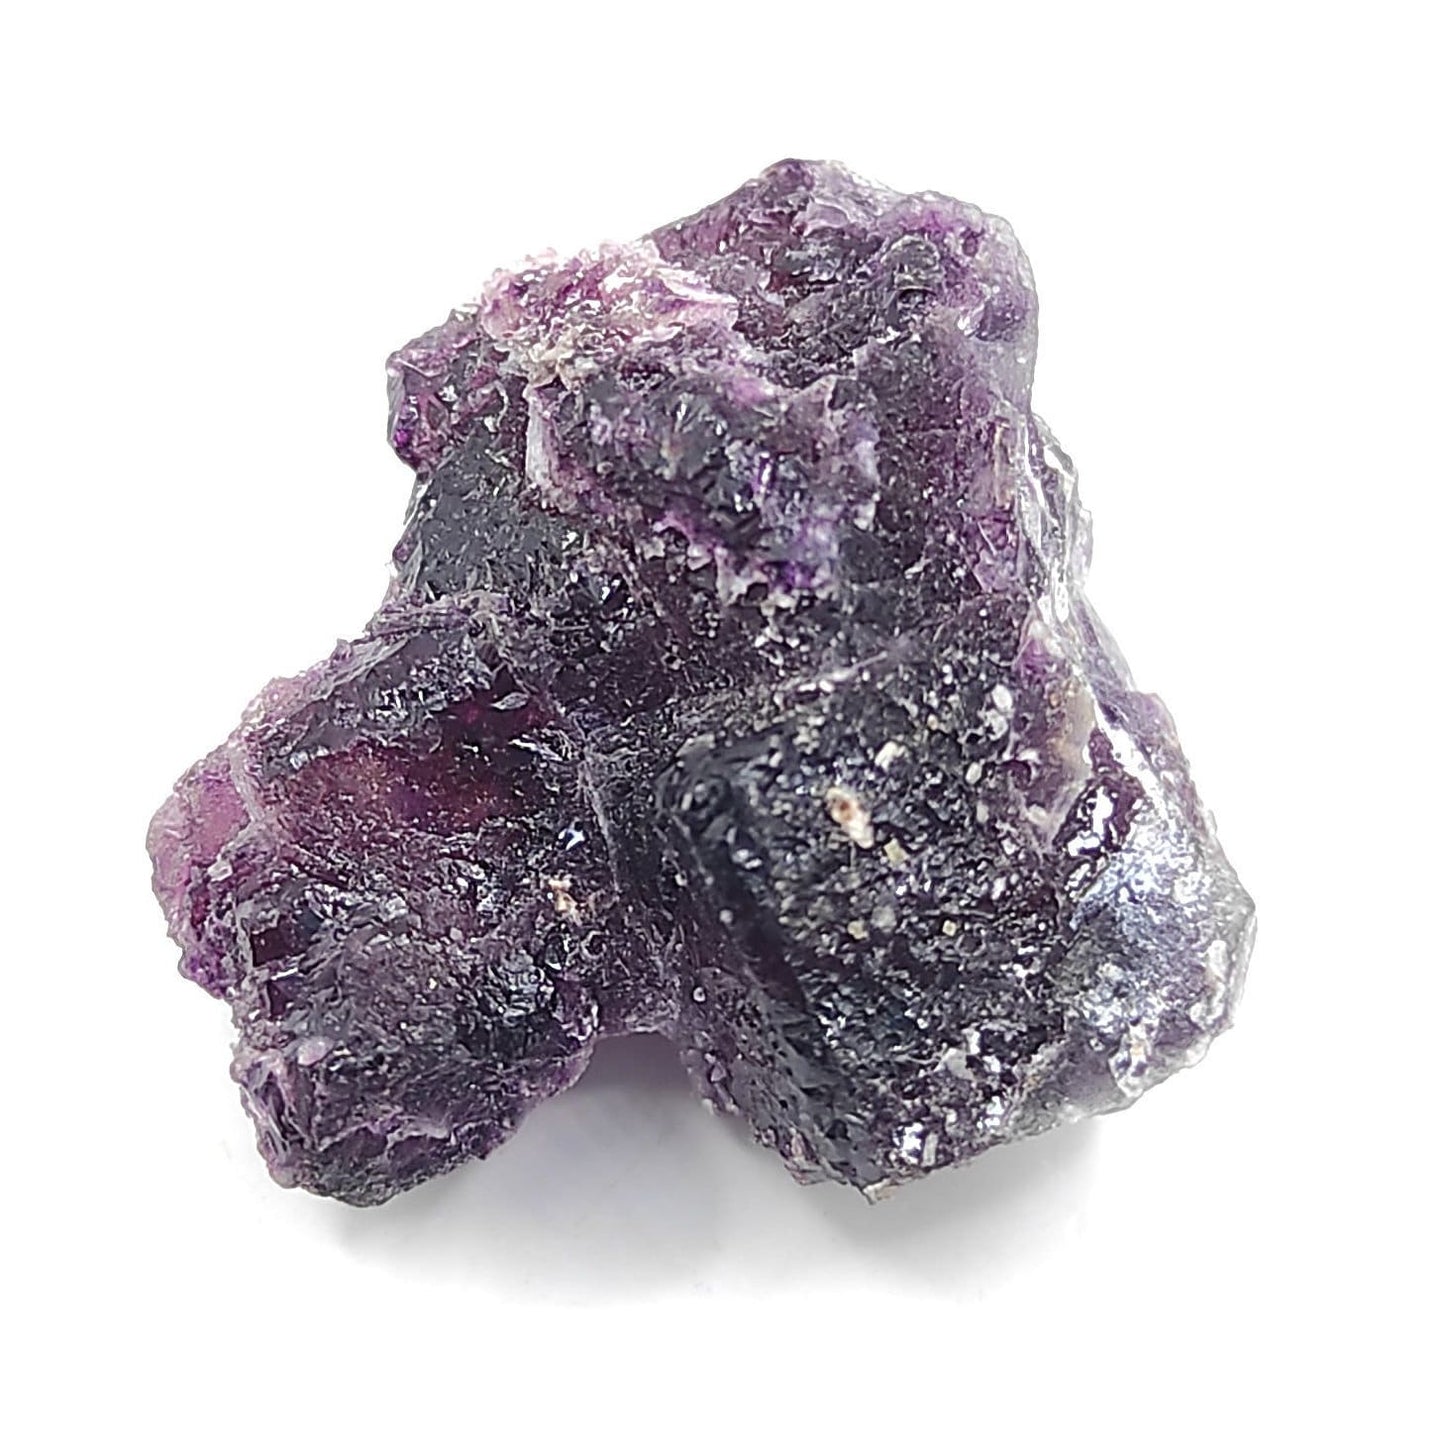 6.61g Mini Erongo Fluorite - Purple Fluorite from Erongo, Namibia - Raw Fluorite Specimen - Natural Minerals Specimen - Deep Purple Fluorite